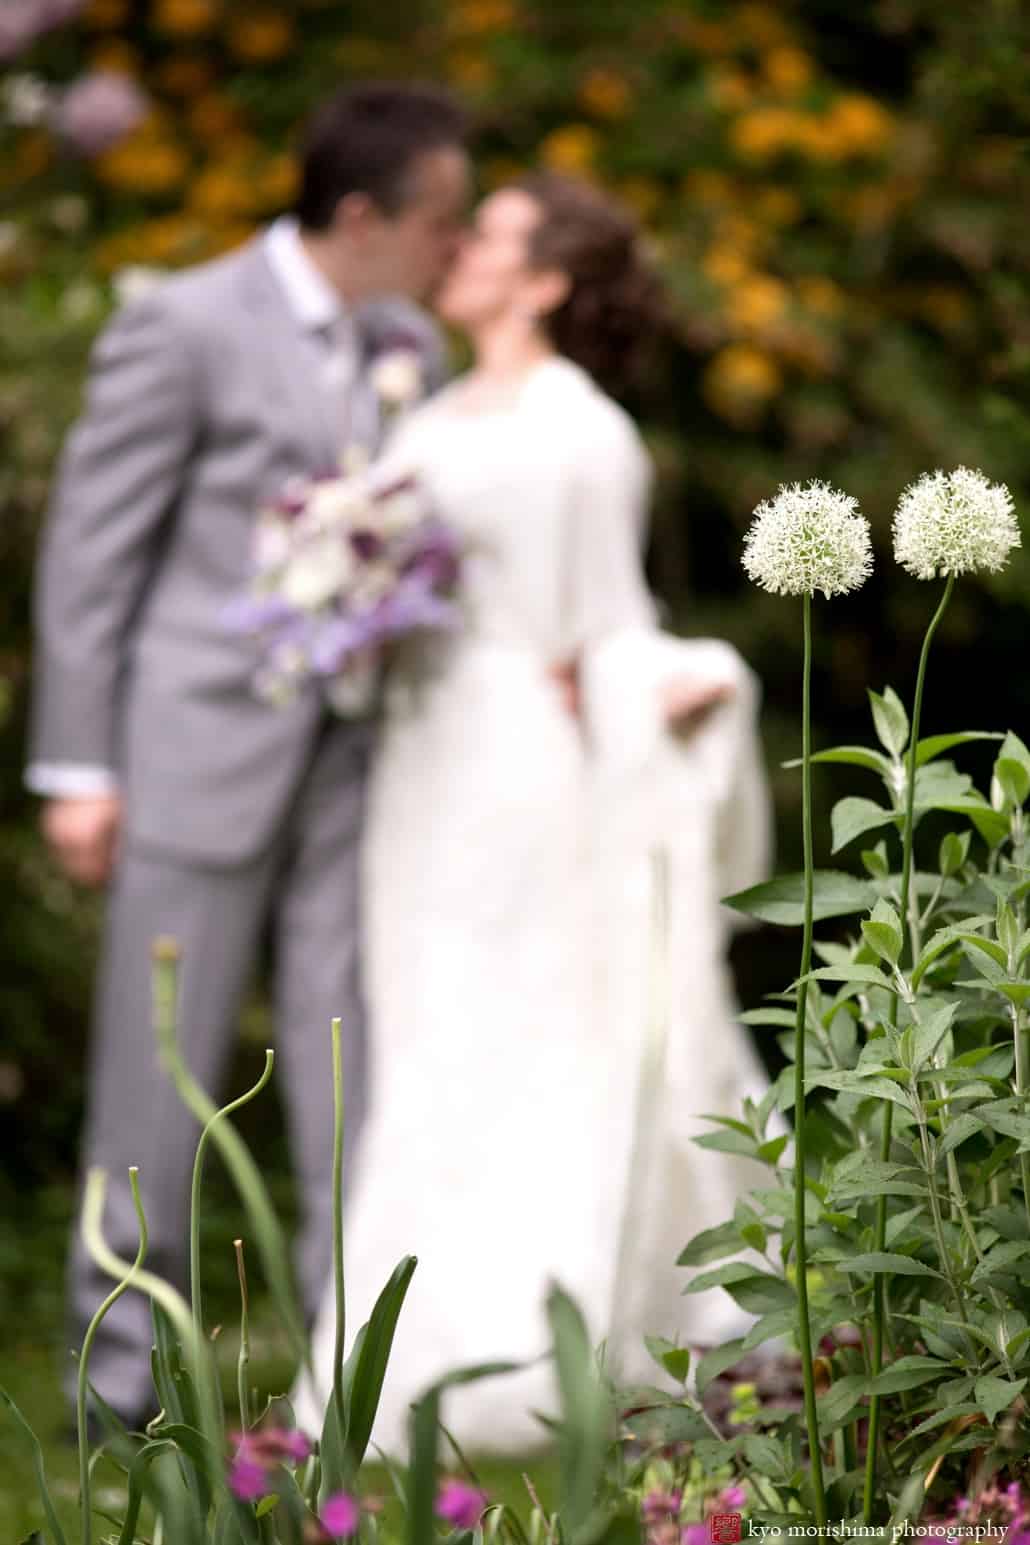 Flowers in bloom at Van Vleck Gardens wedding portrait session, photographed by Montclair wedding photographer Kyo Morishima